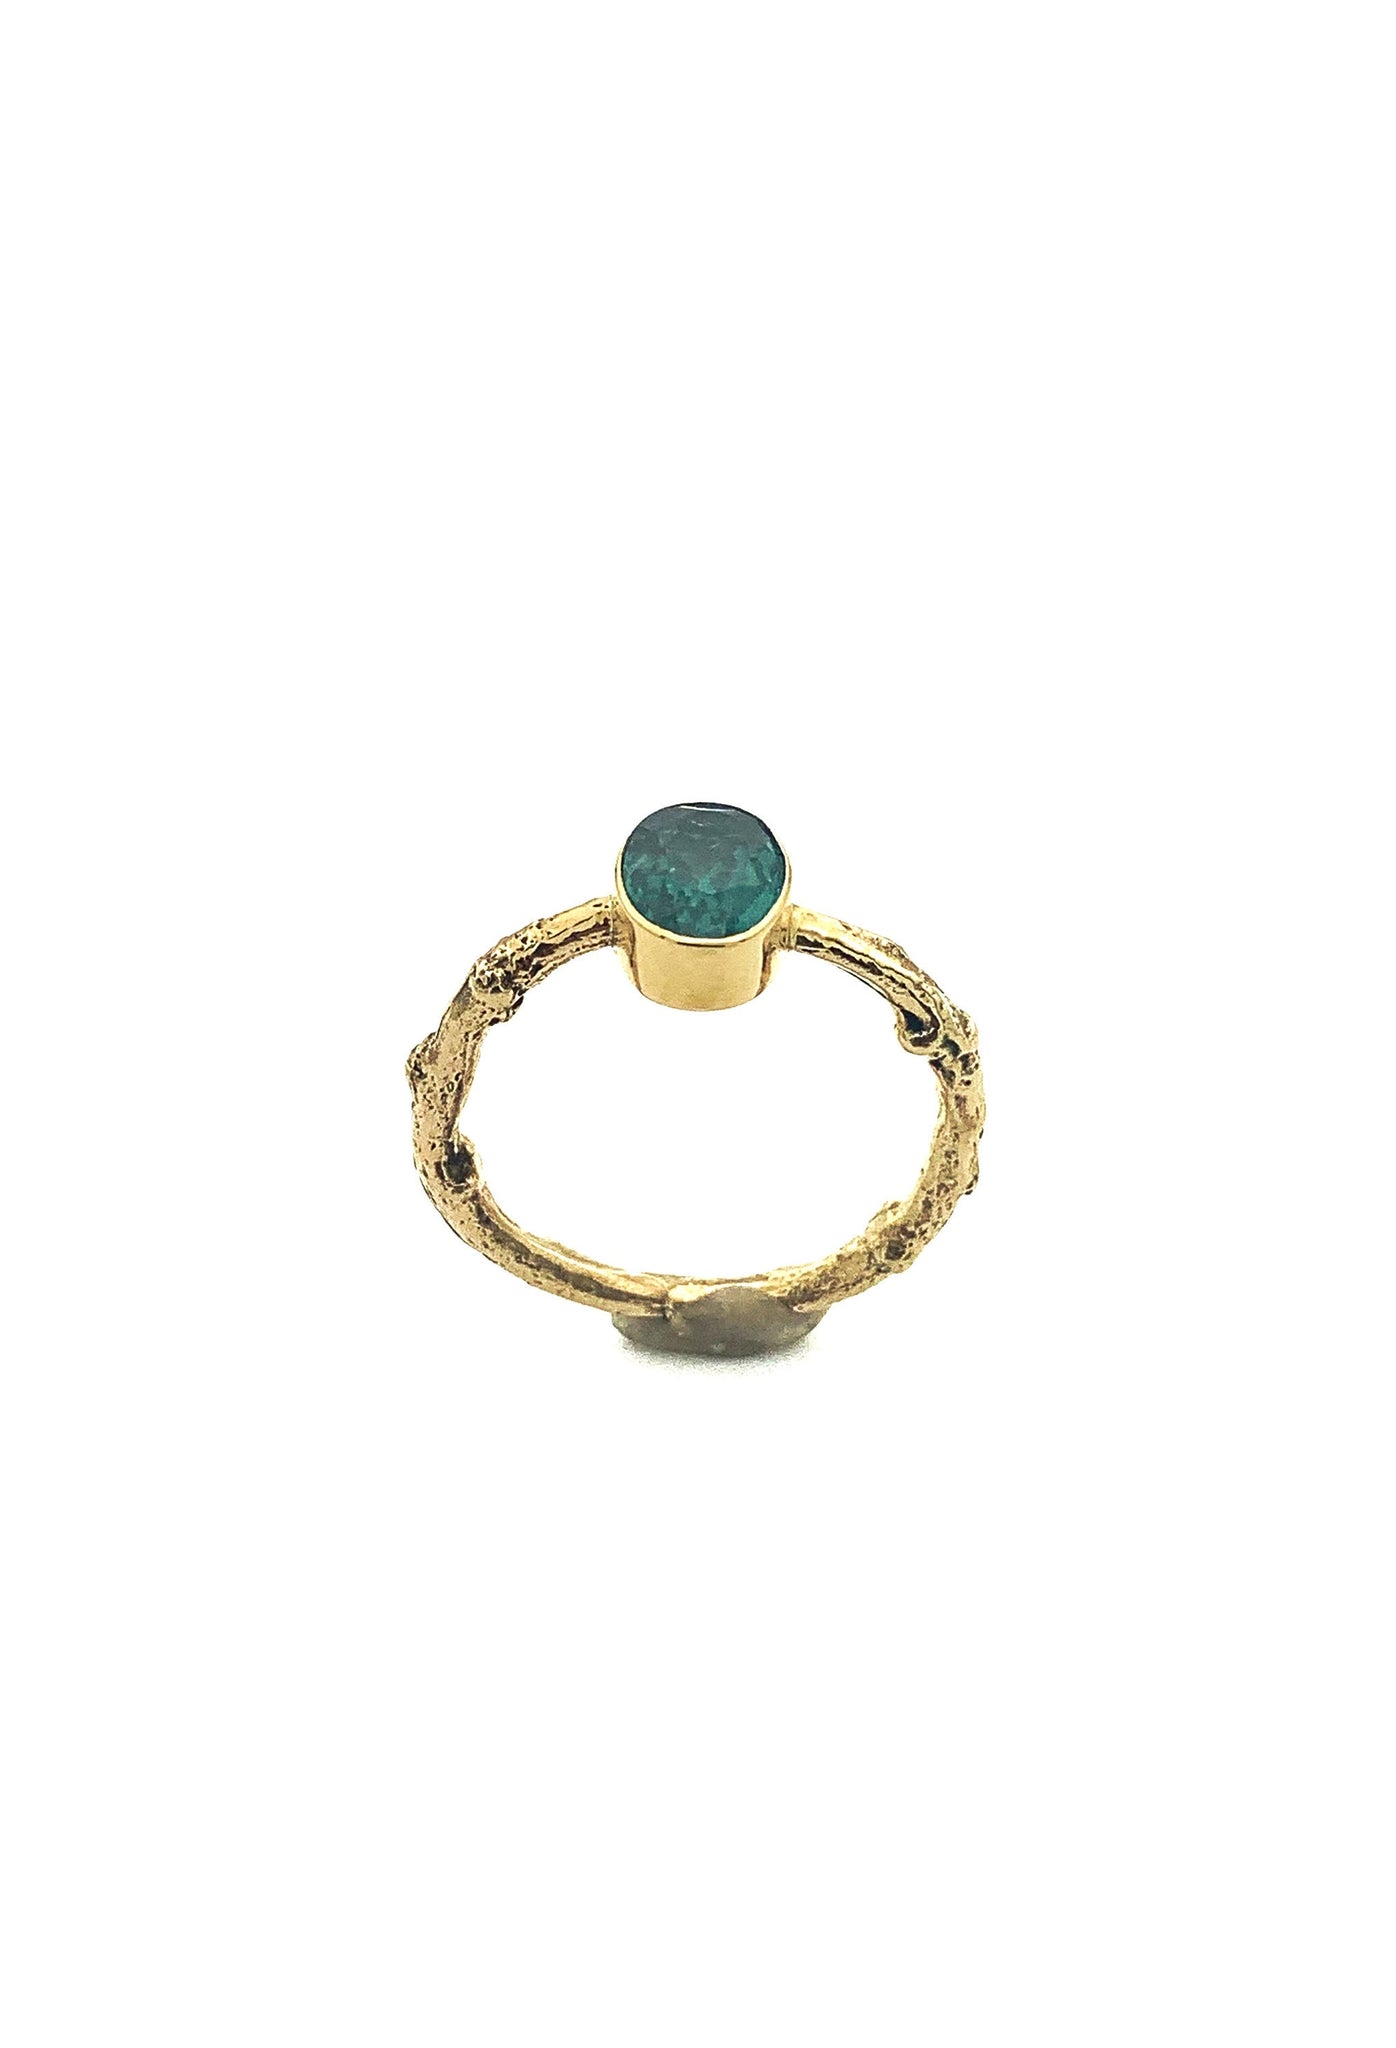 Green Tourmaline Ring 14k Gold, Statement Ring, Friendship Ring, Alternate Engagement Ring, OOAK gold gemstone ring, October Birthstone Ring